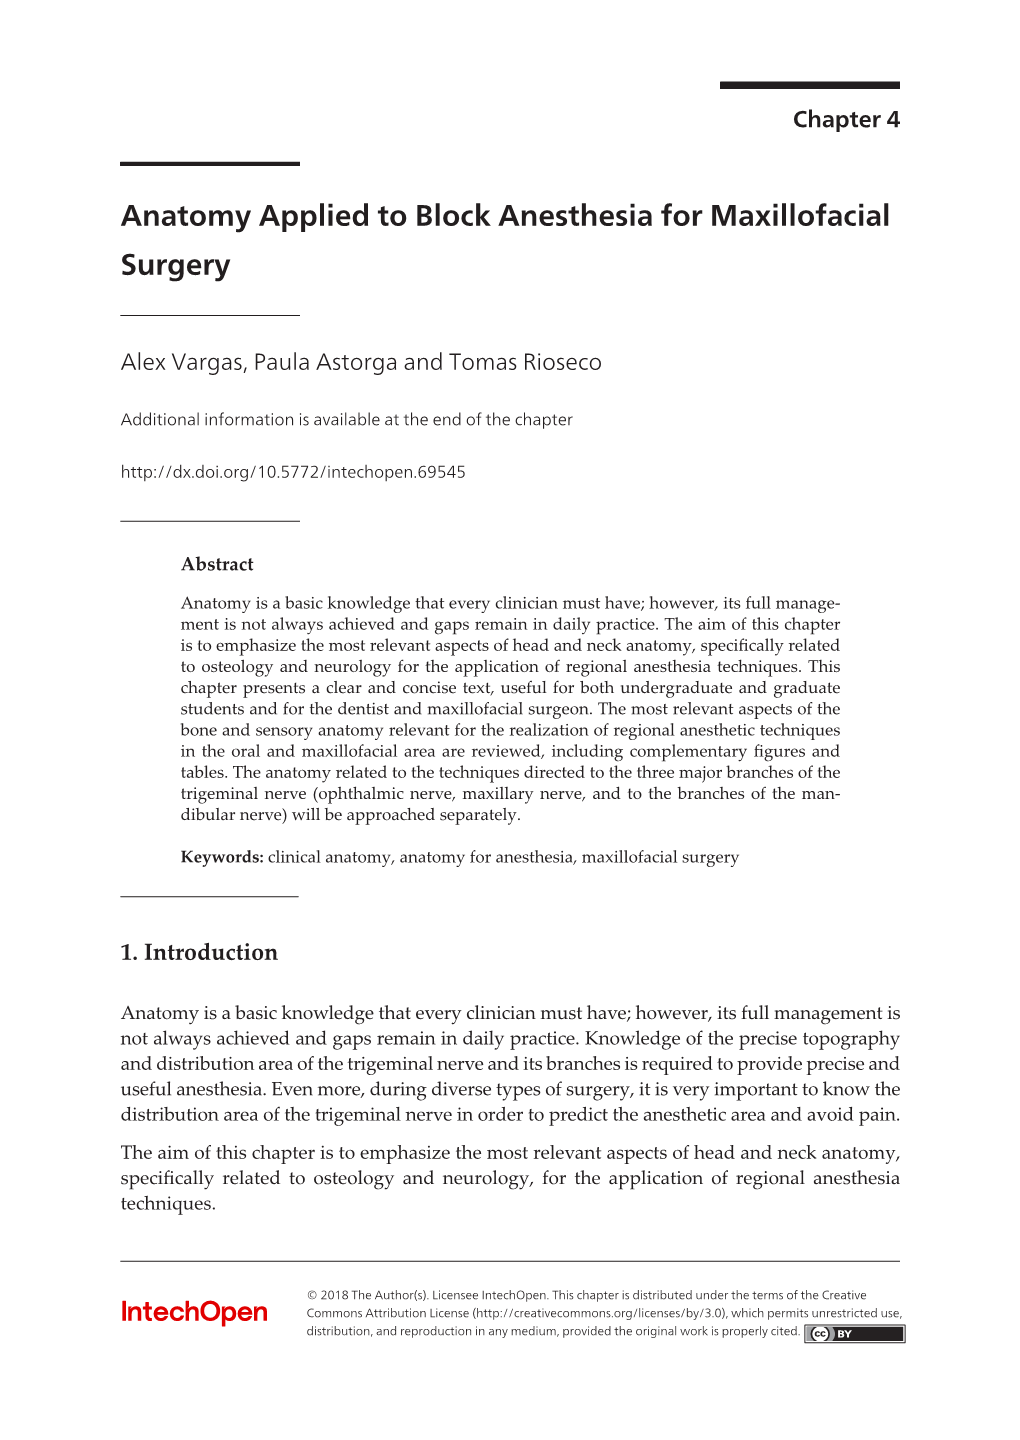 Anatomy Applied to Block Anesthesia for Maxillofacial Surgery